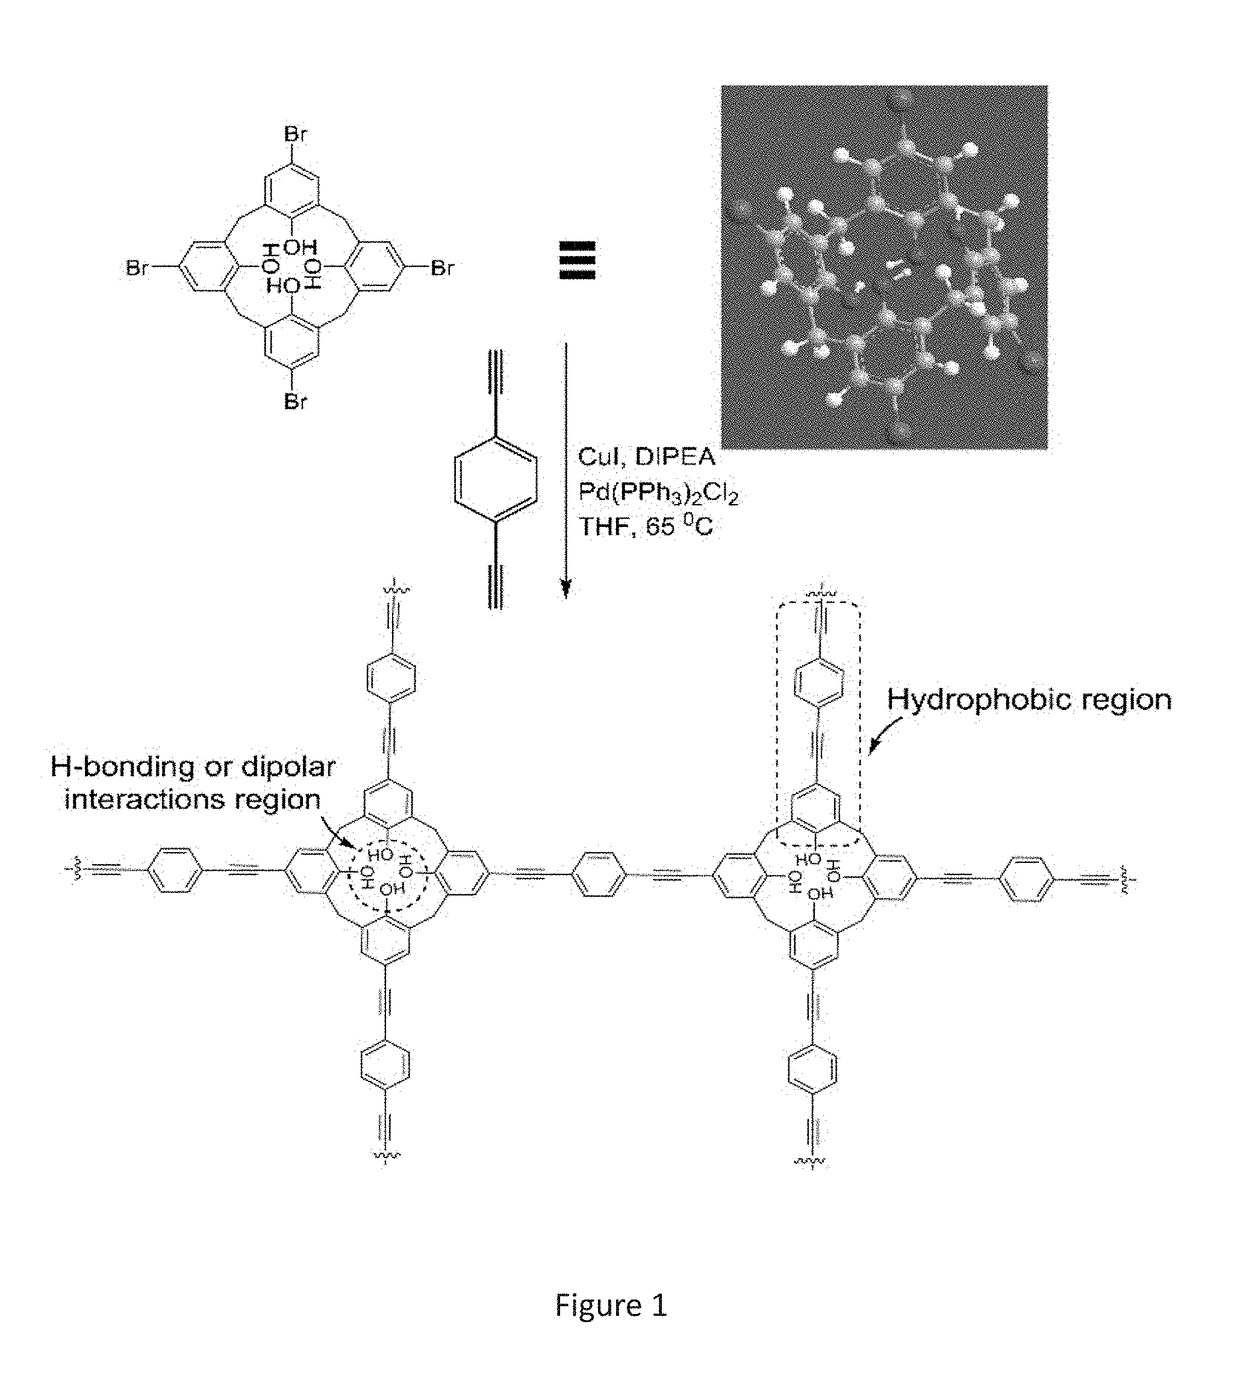 Polycalixarene materials, methods of making same, and uses thereof